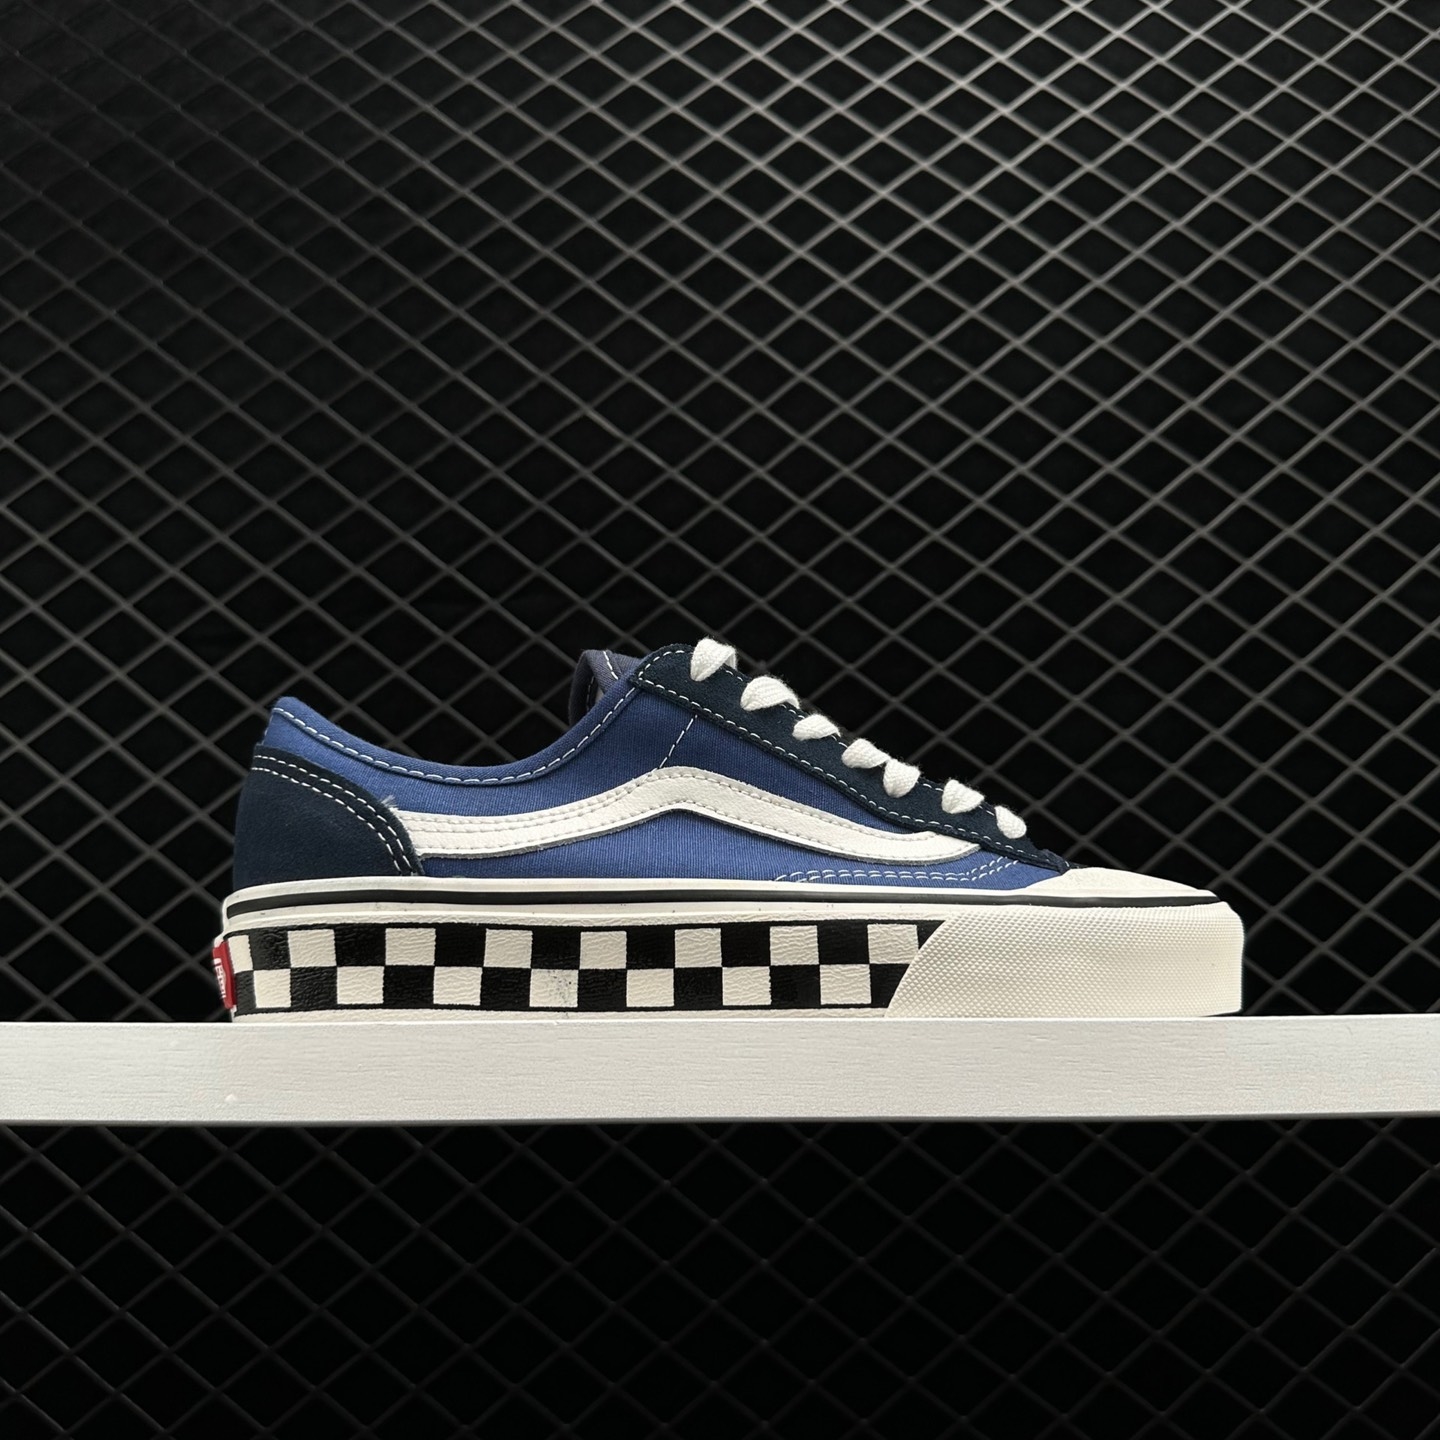 Vans Checkerboard Style 36 Decon SF in 'True Marshmallow' Blue - Shop Now!